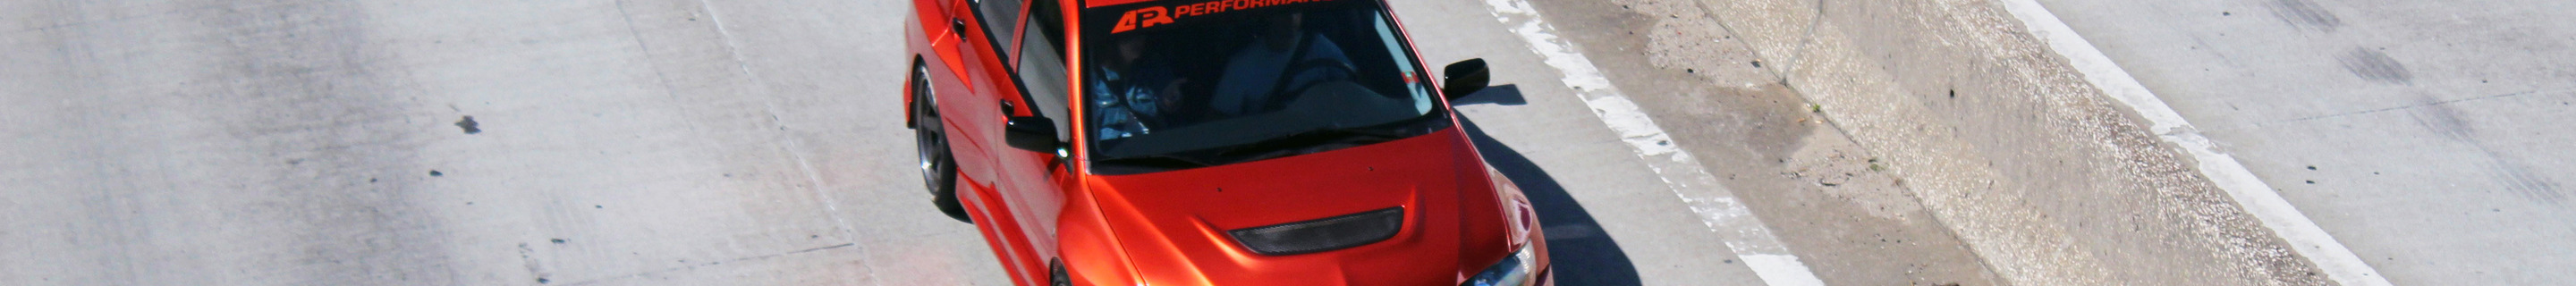 Mitsubishi Lancer Evolution IX APR Performance